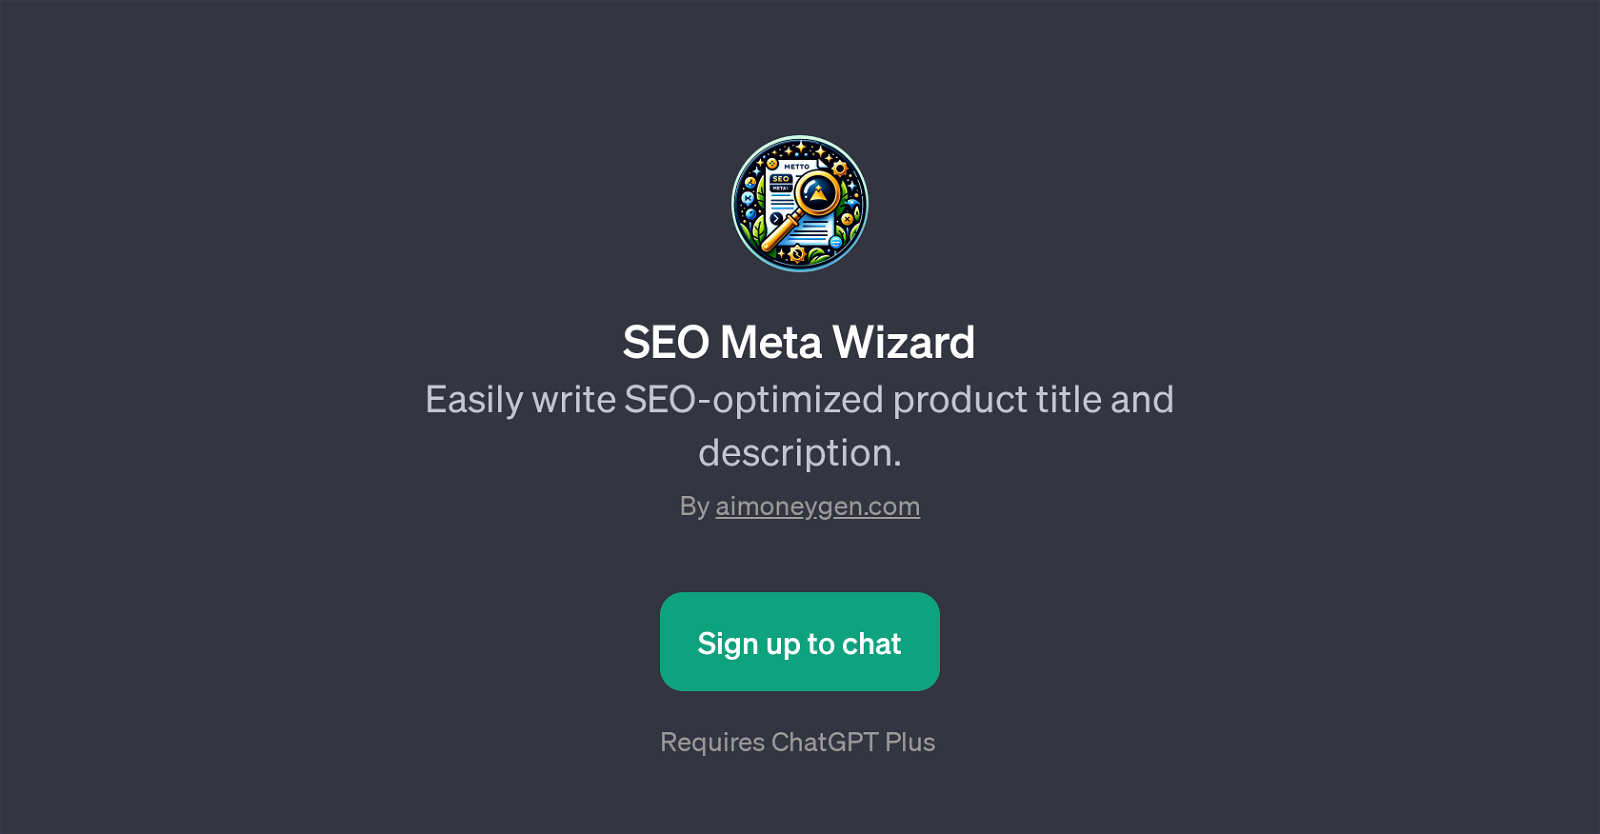 SEO Meta Wizard website